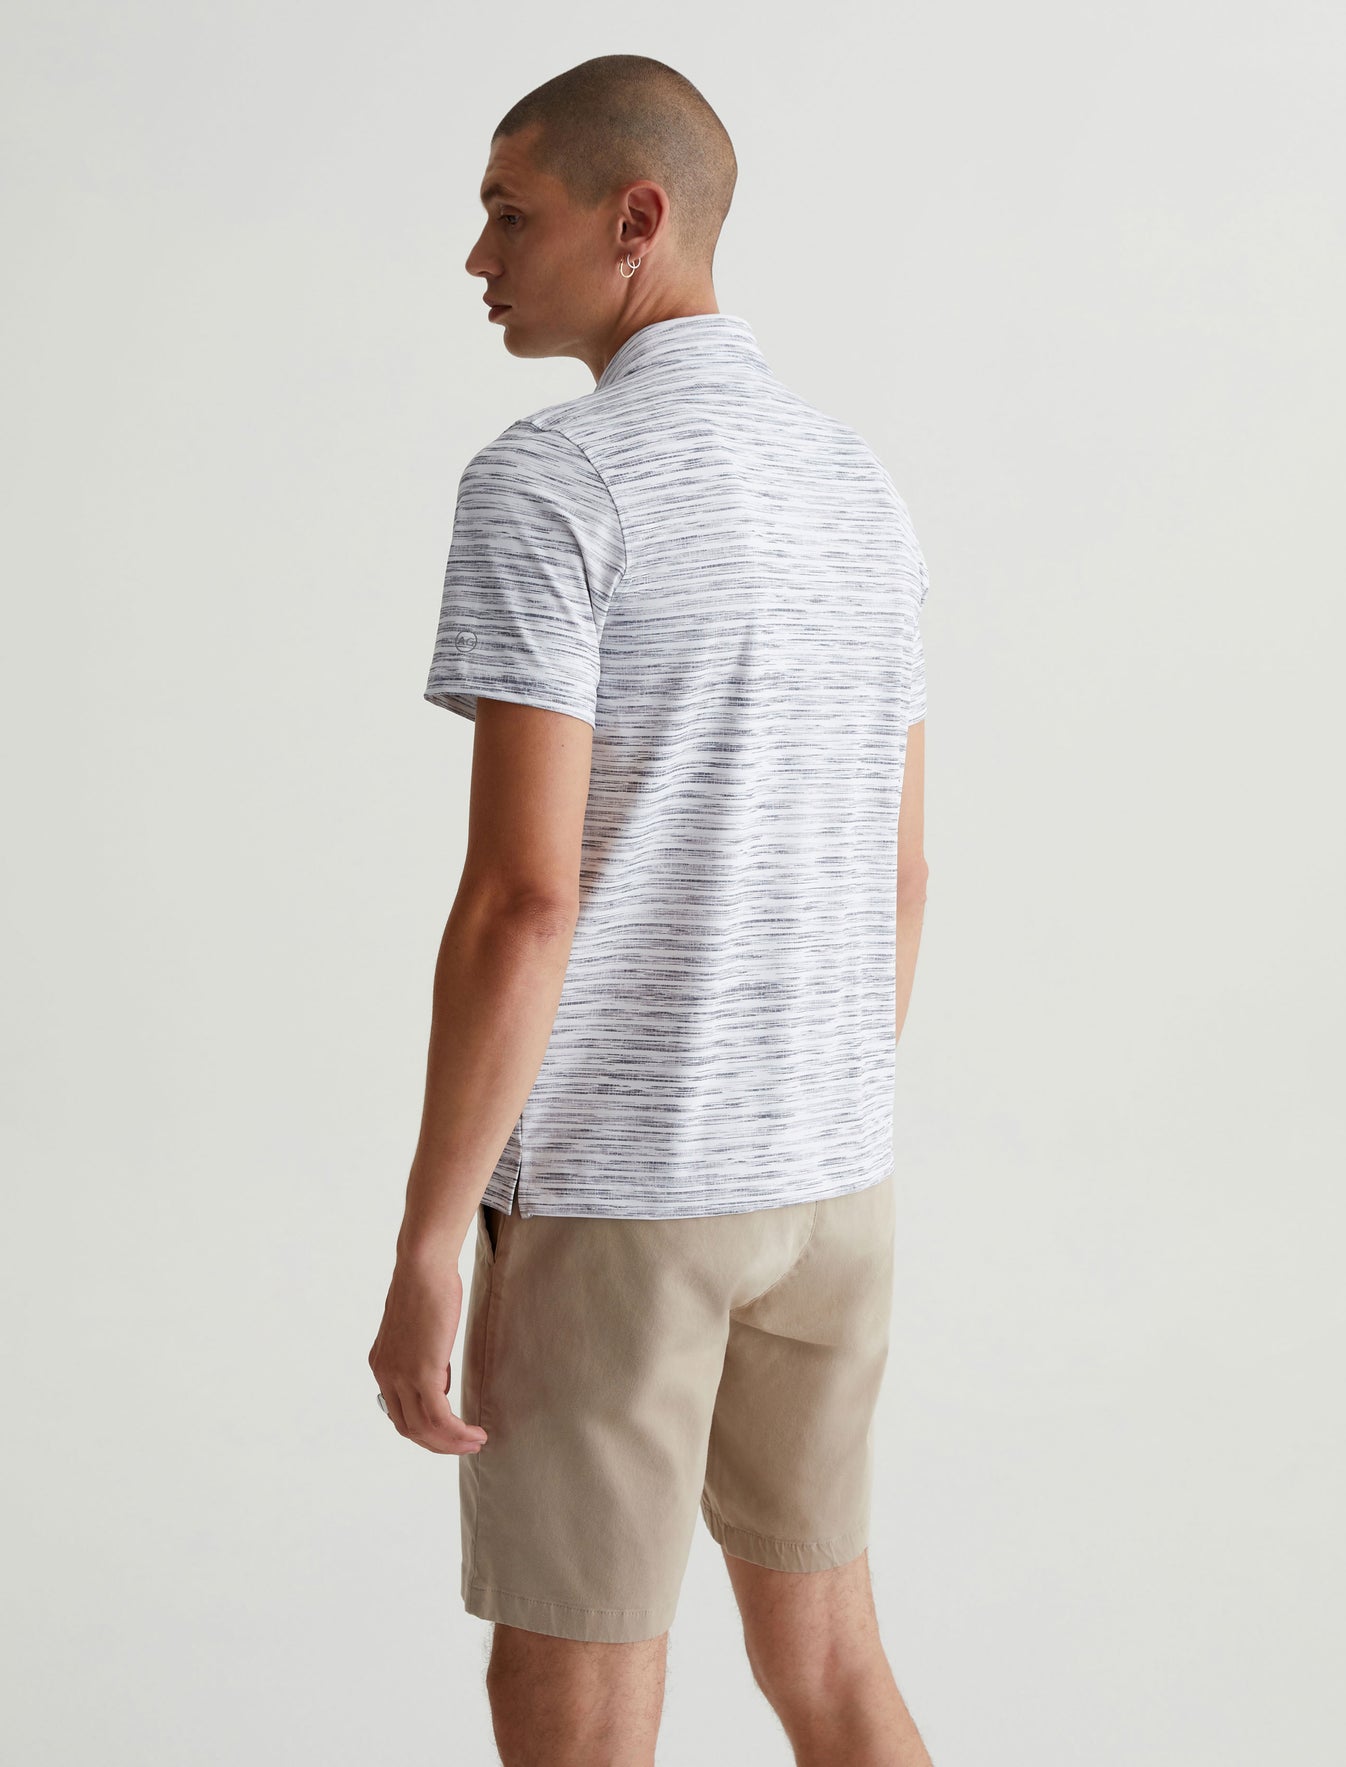 Bryce S/S Polo Slub Stripe Light Grey Classic Fit Short Sleeve Polo T-Shirt Mens Top Photo 6